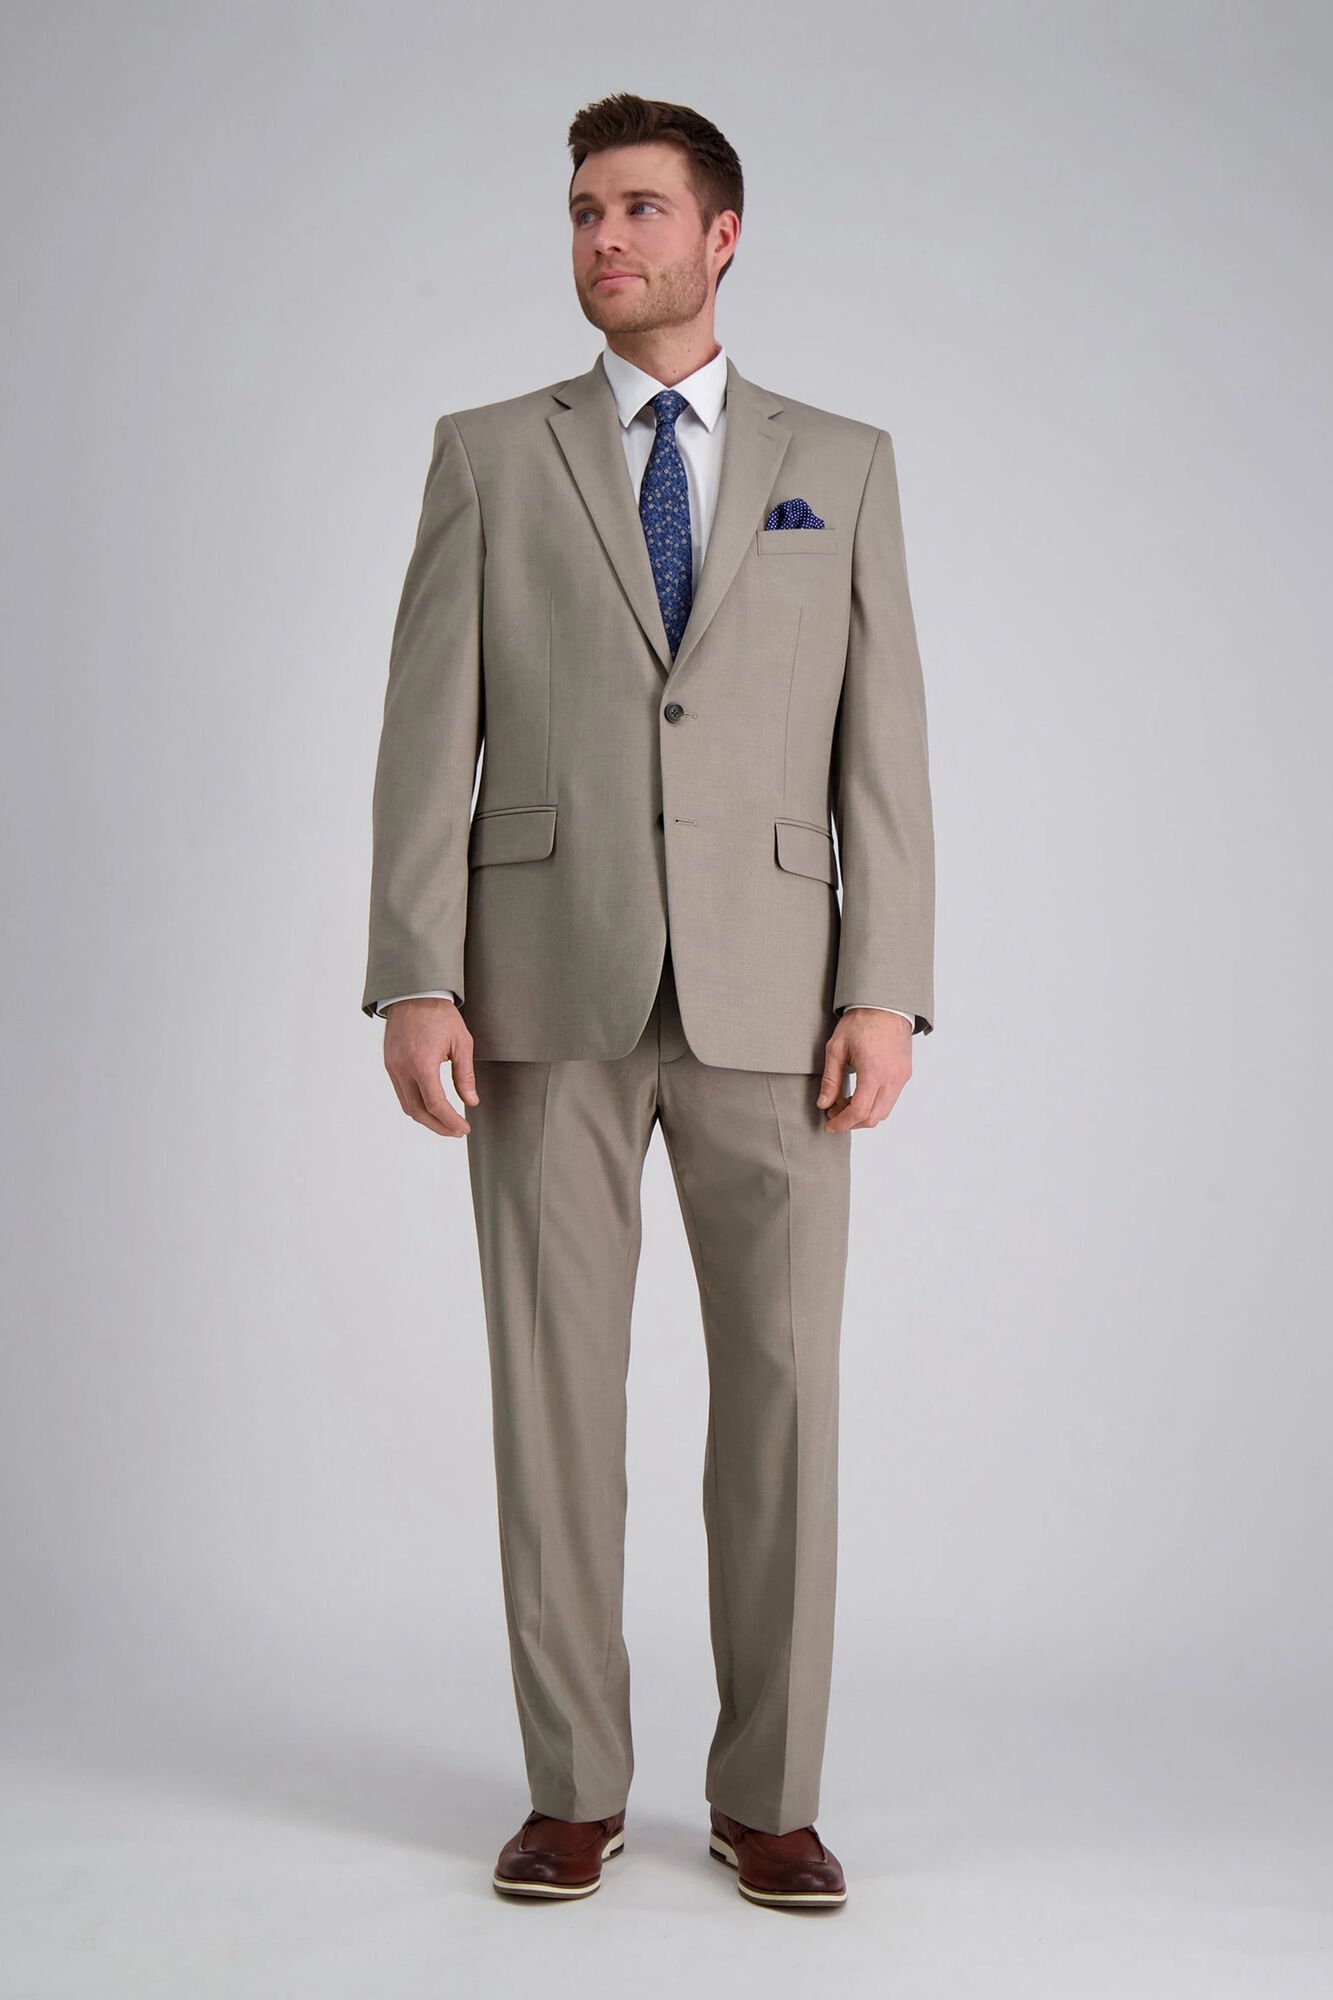 J.M. Haggar Premium Stretch Suit Jacket Oatmeal (HZ00182 Clothing Suits) photo